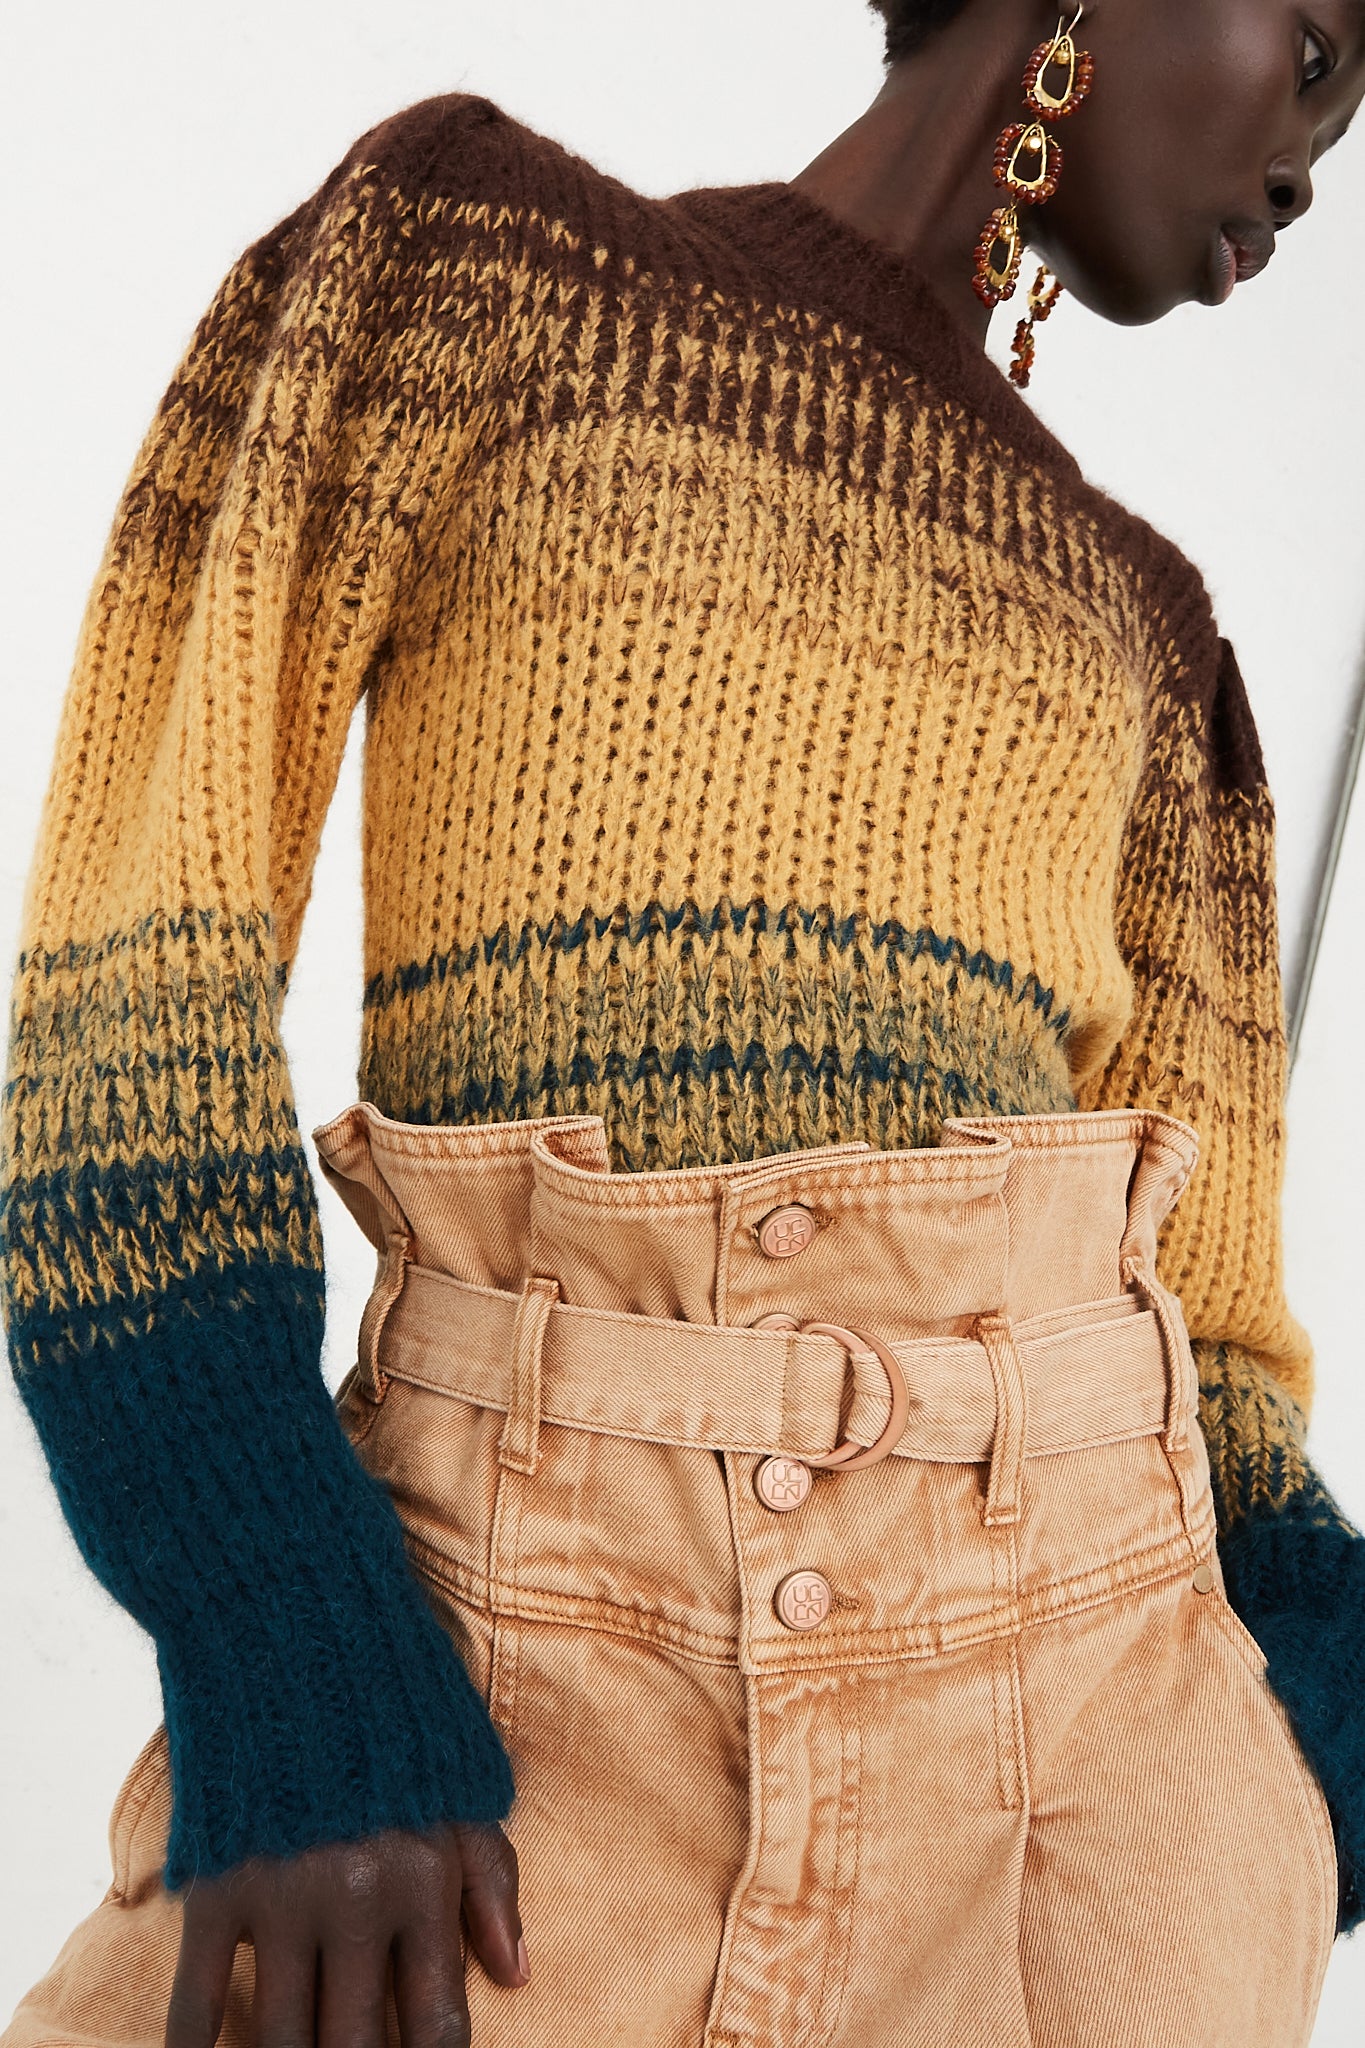 Rosalia Alpaca Knit Sweater in Desert by Ulla Johnson for Oroboro Front Upclose